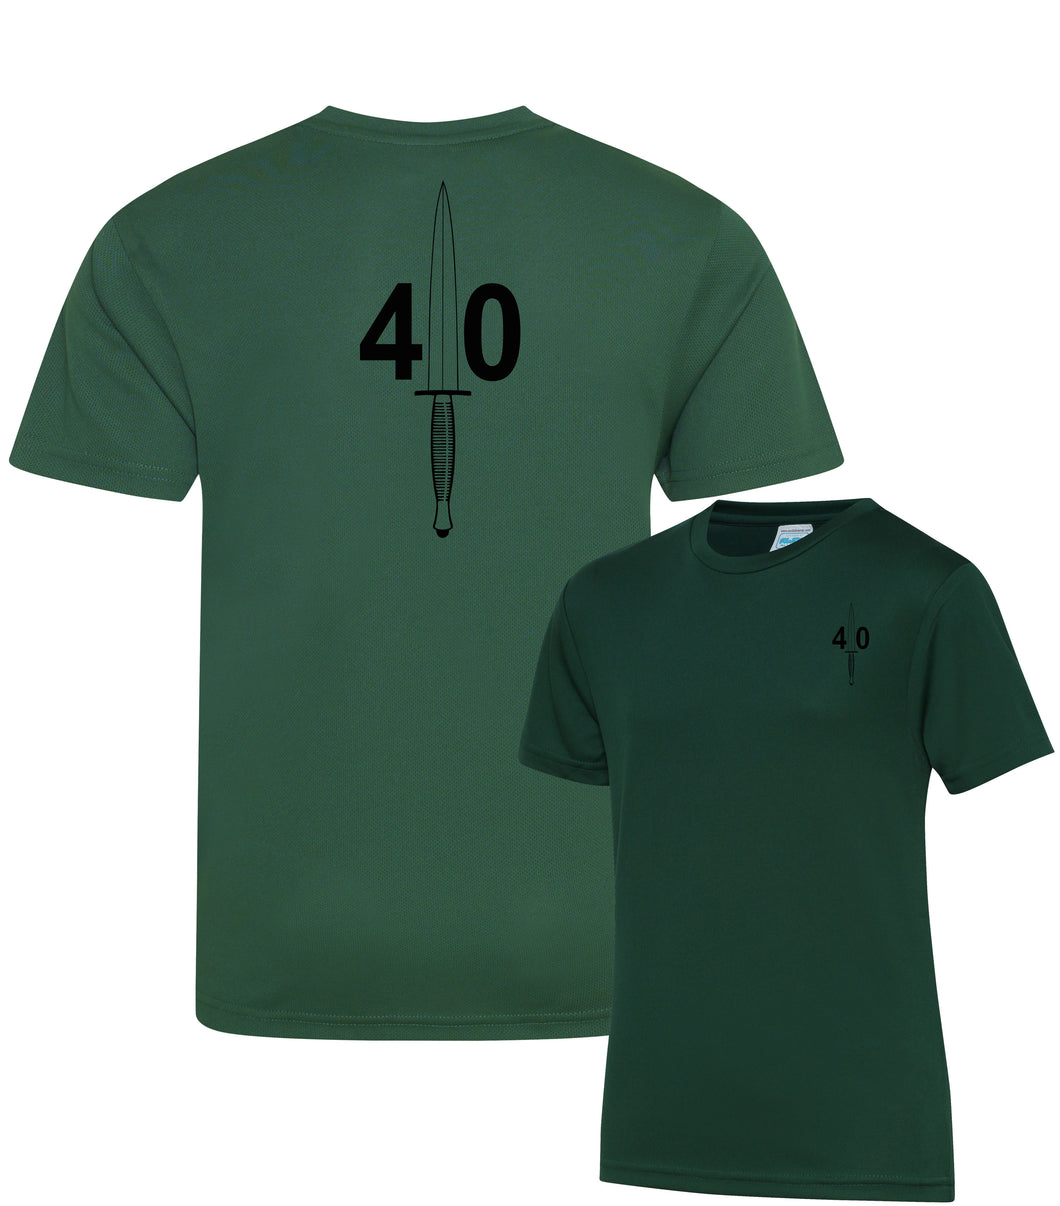 40 Commando (Royal Marines) - Fully Printed Wicking Fabric T-shirt